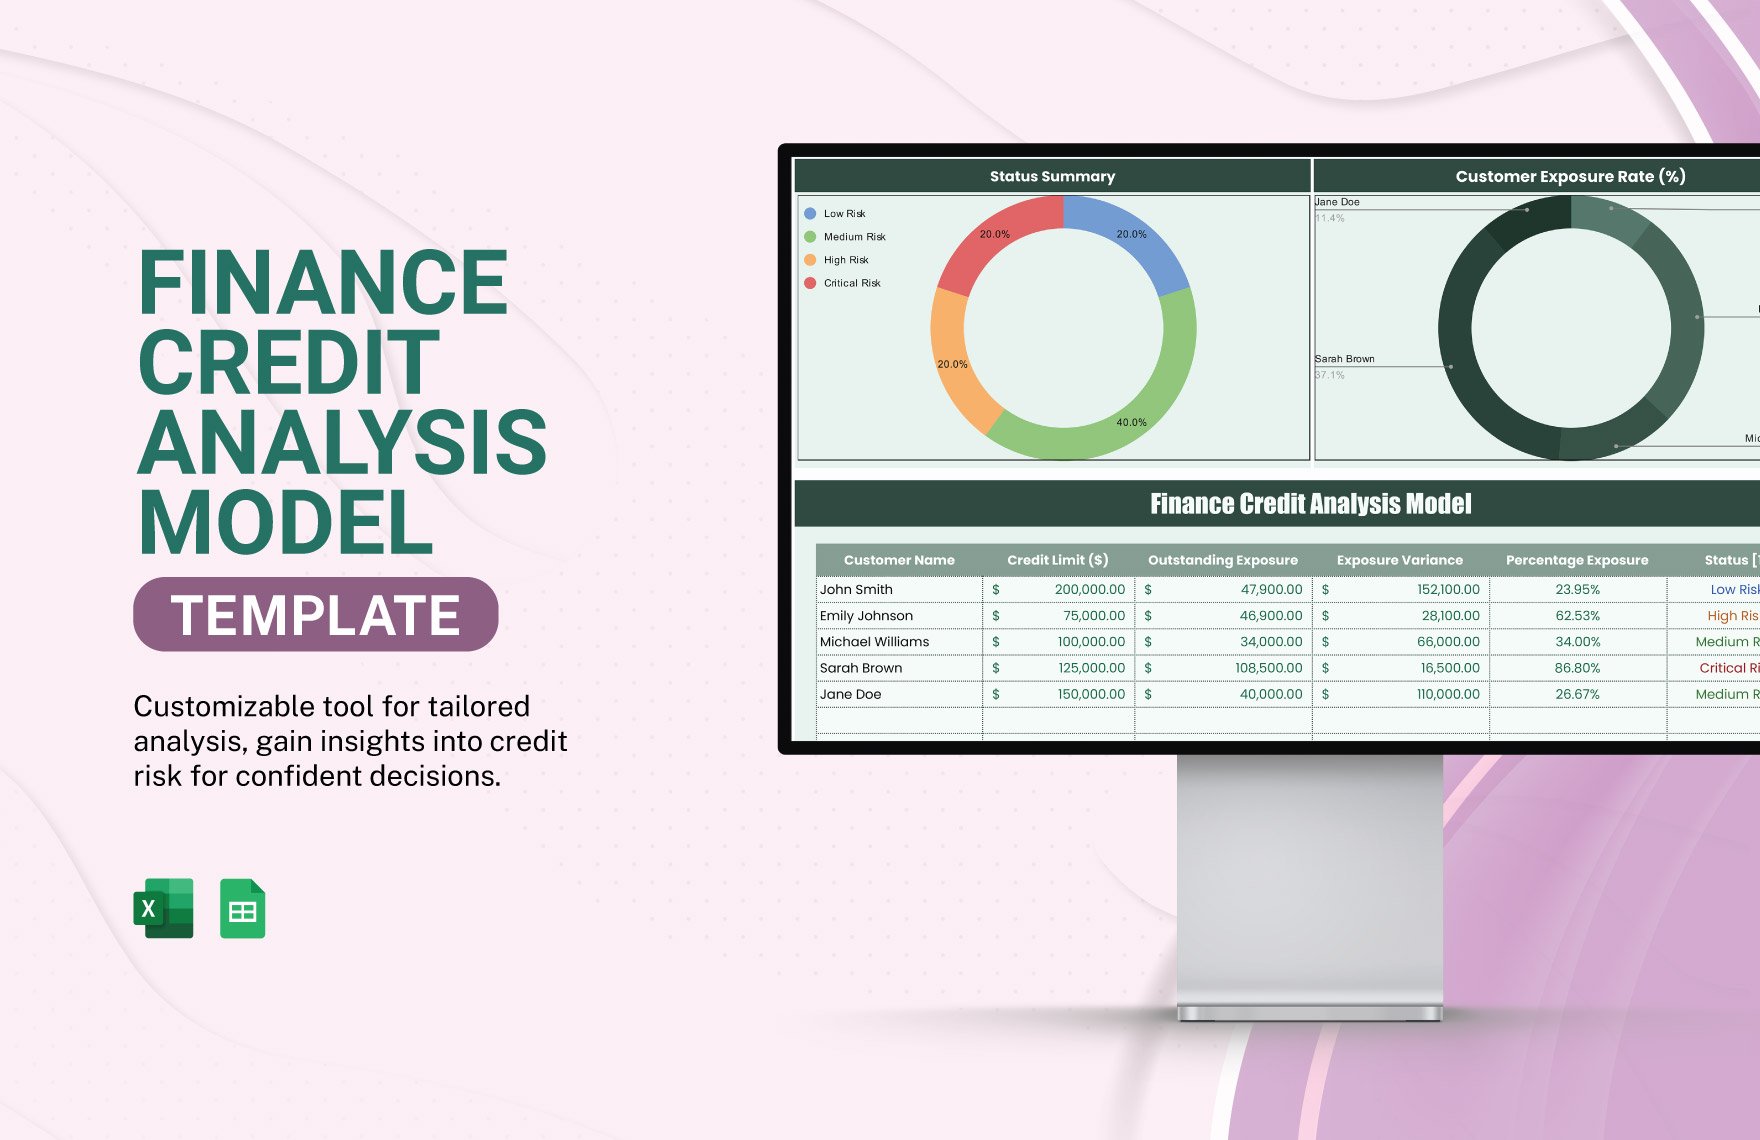 Finance Credit Analysis Model Template